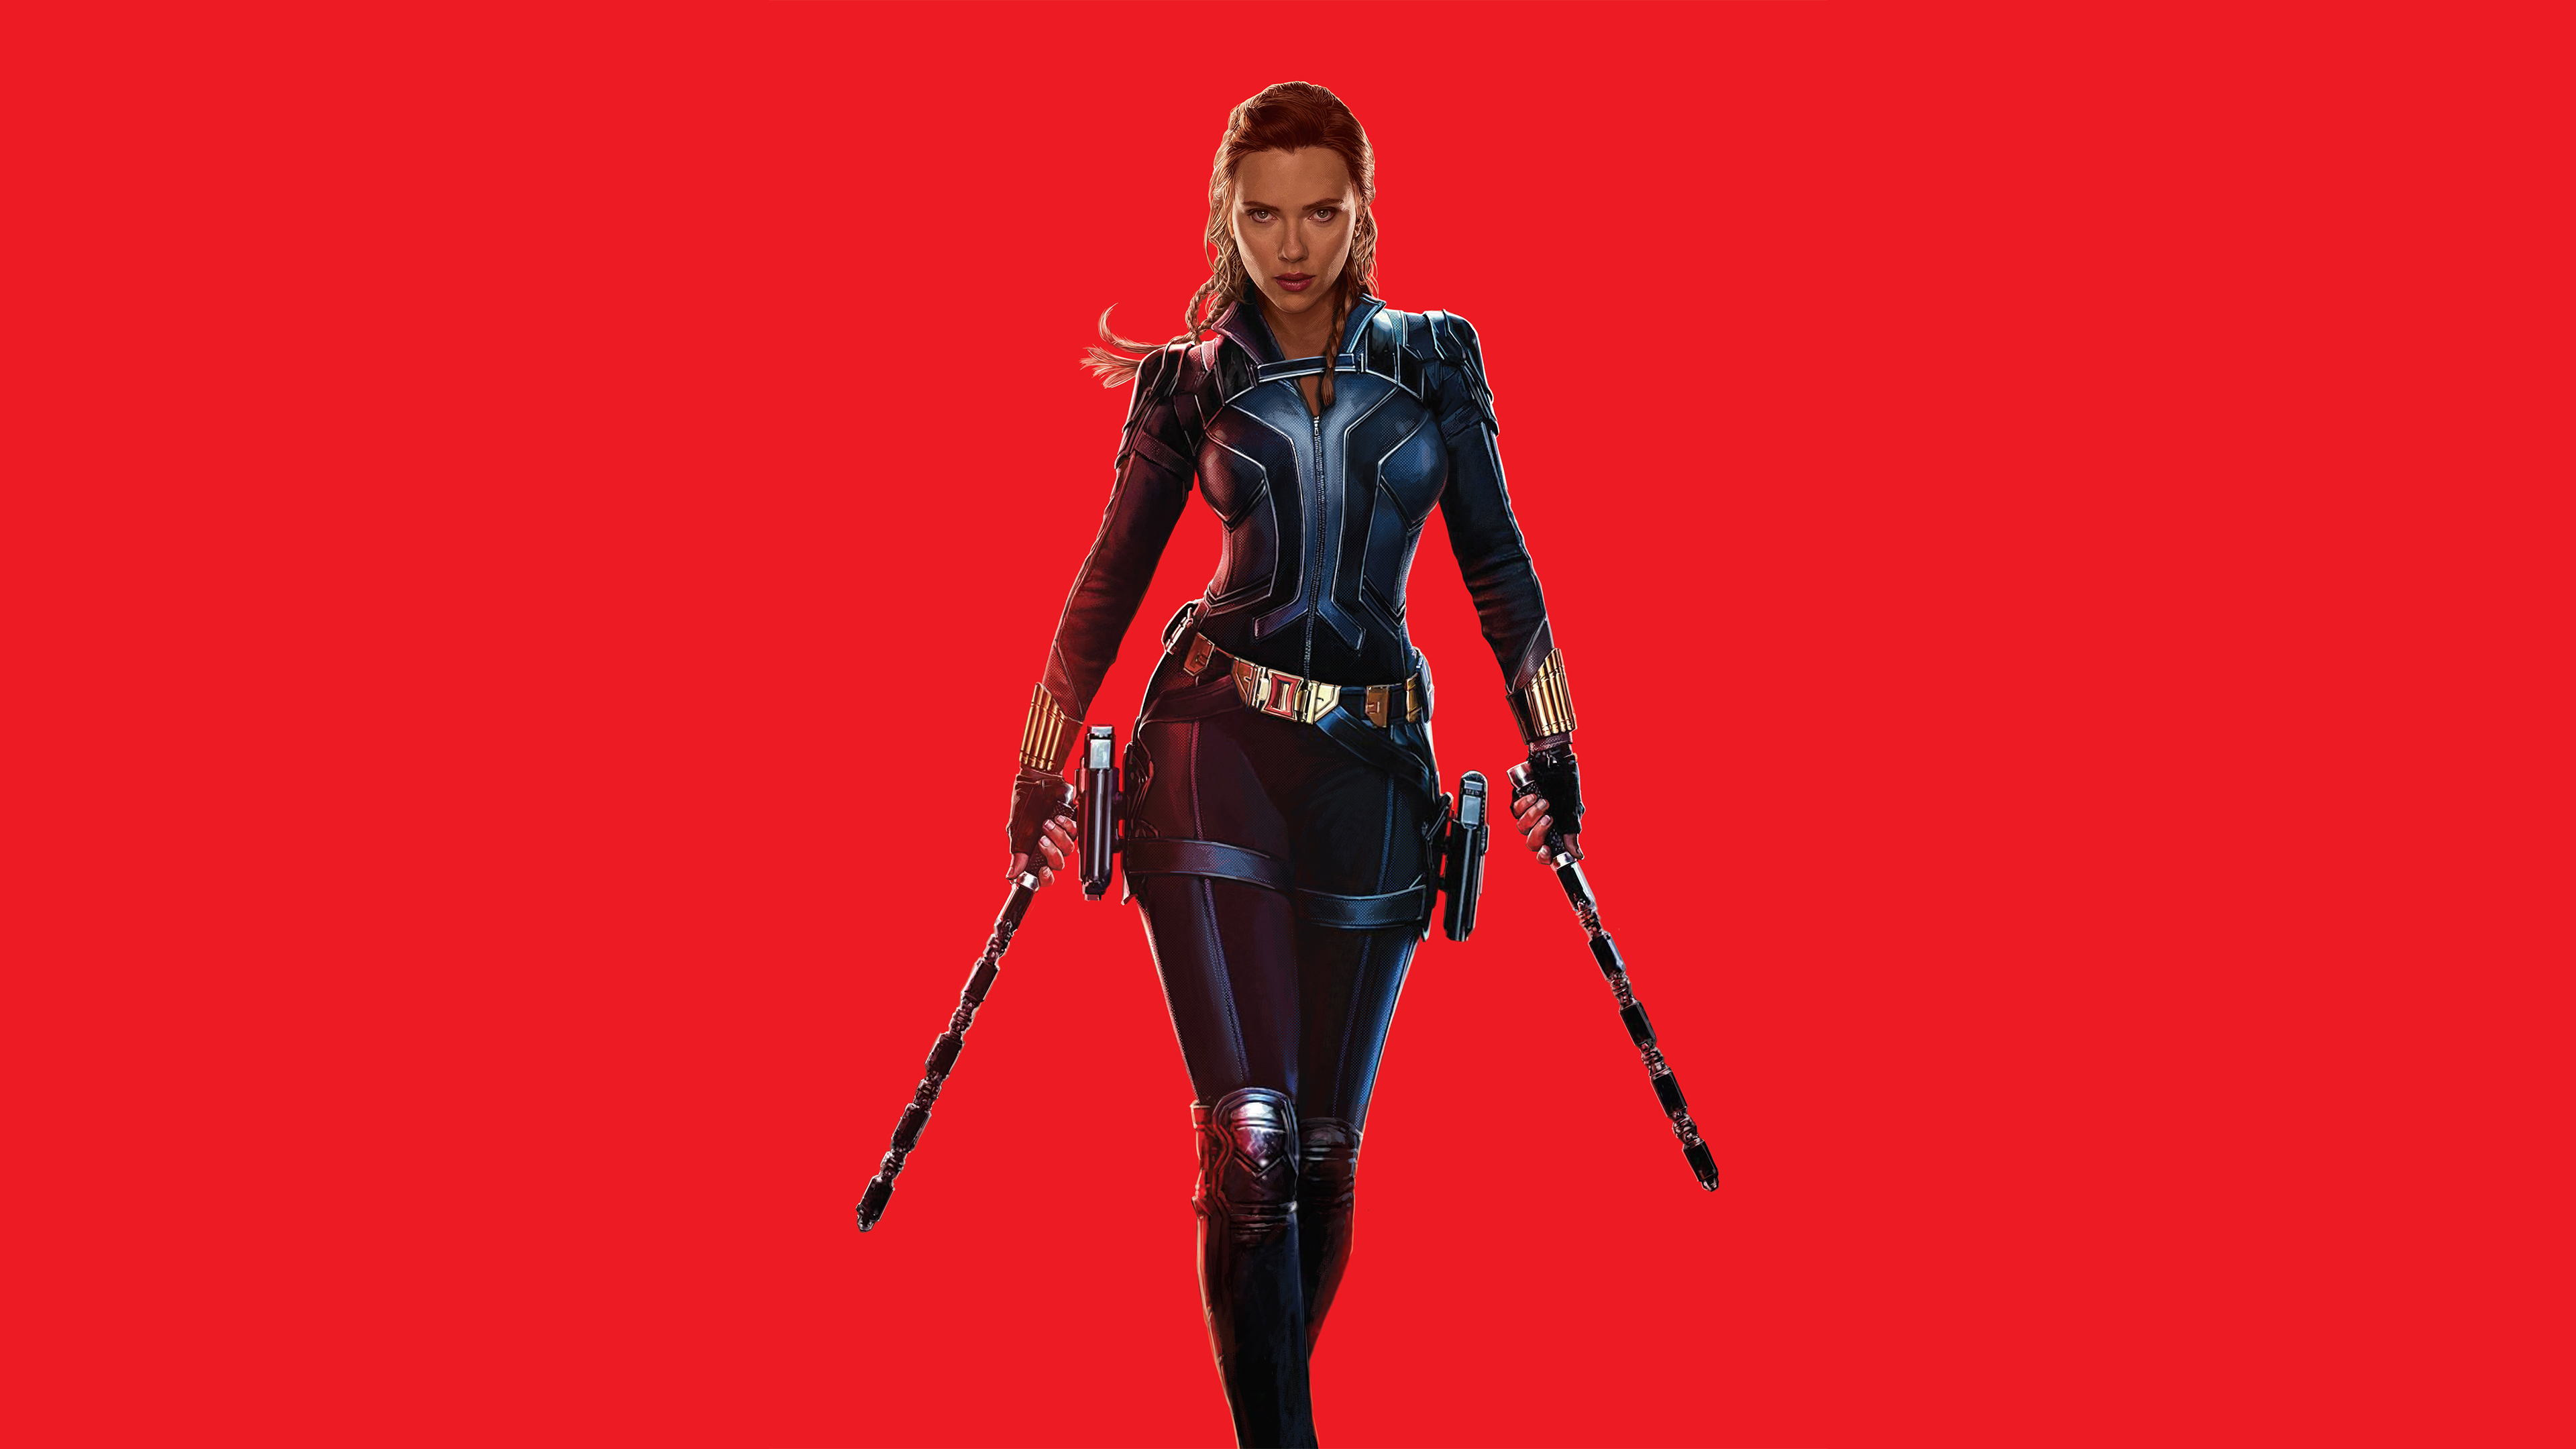 2932x2932 Scarlett Johansson As Natasha Romanoff 4k Black Widow Ipad Pro Retina Display Wallpaper Hd Movies 4k Wallpapers Images Photos And Background